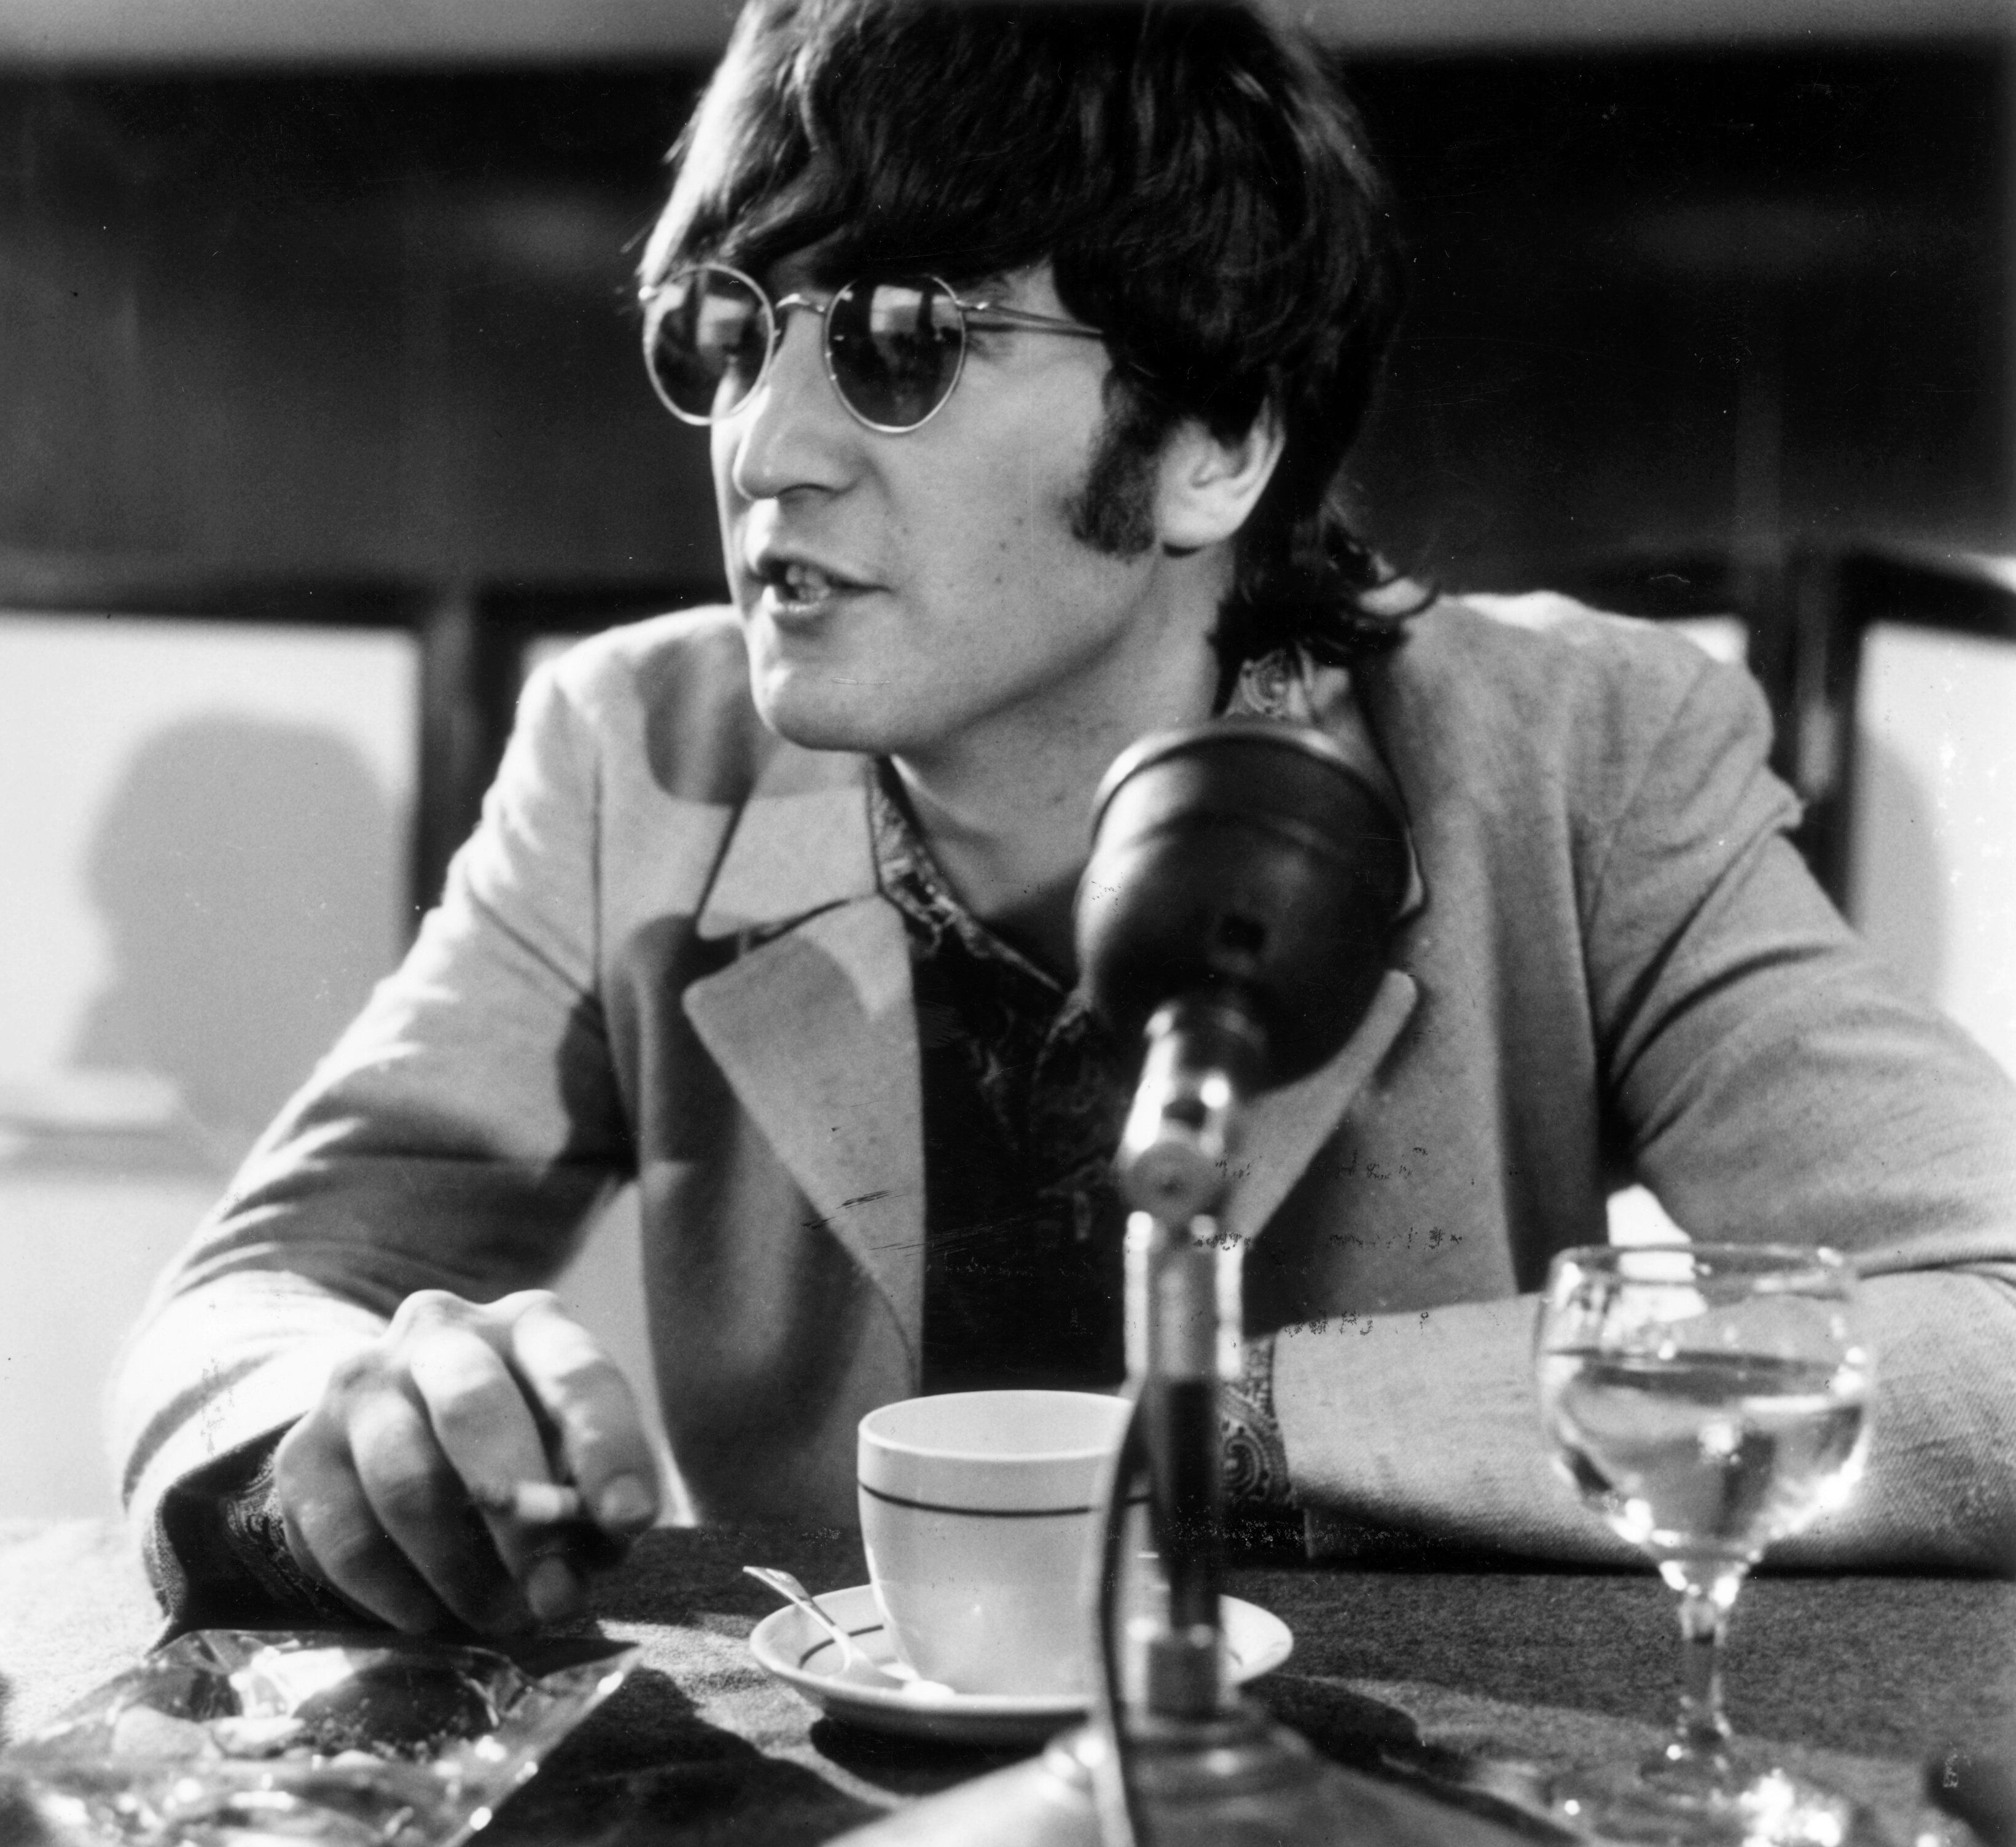 John Lennon with a cup